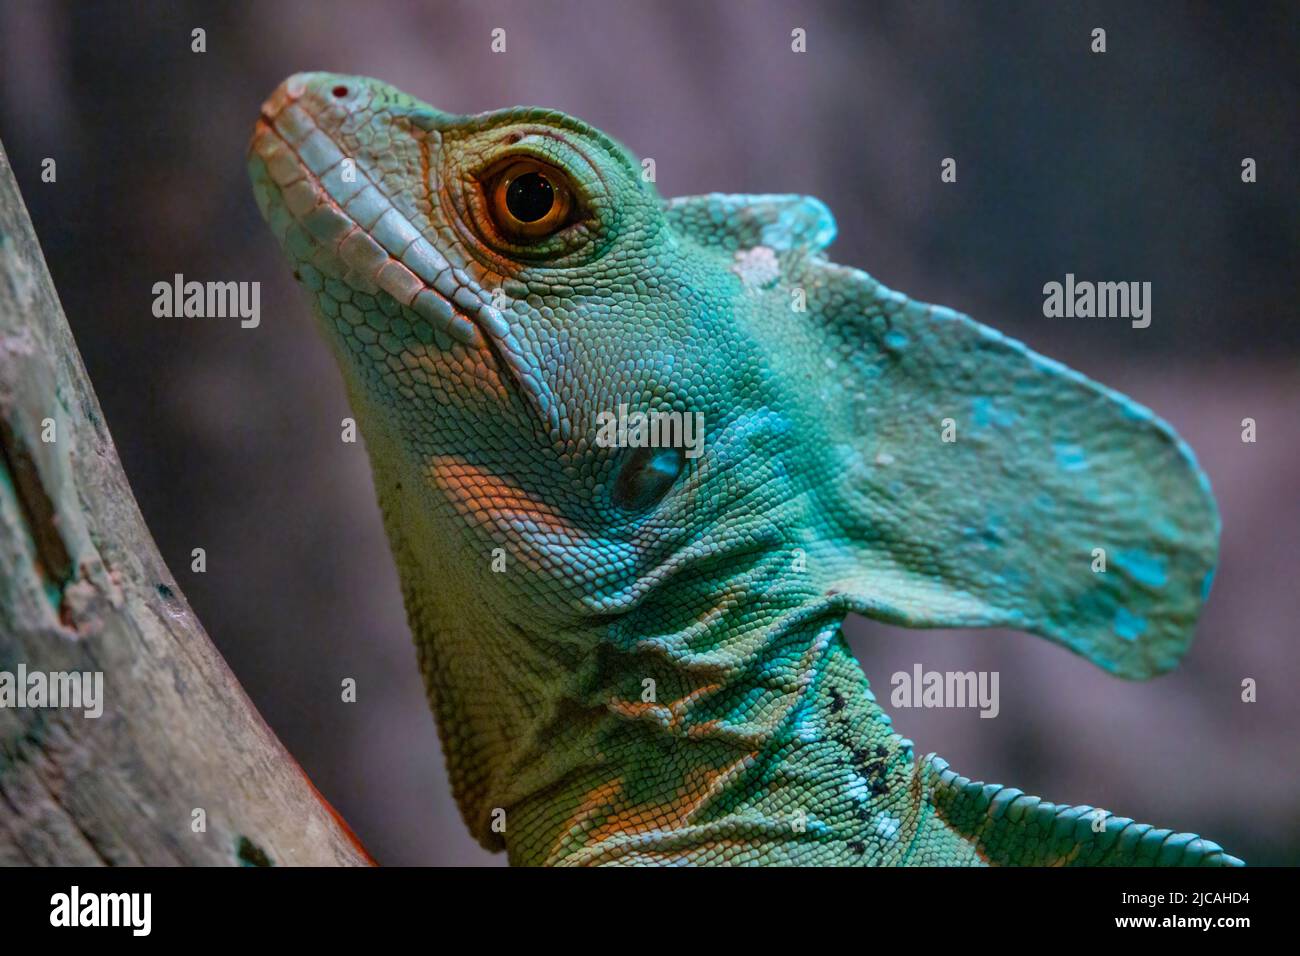 Lucertola testa estrema close up. Testa di lucertola verde esotica. Foto Stock